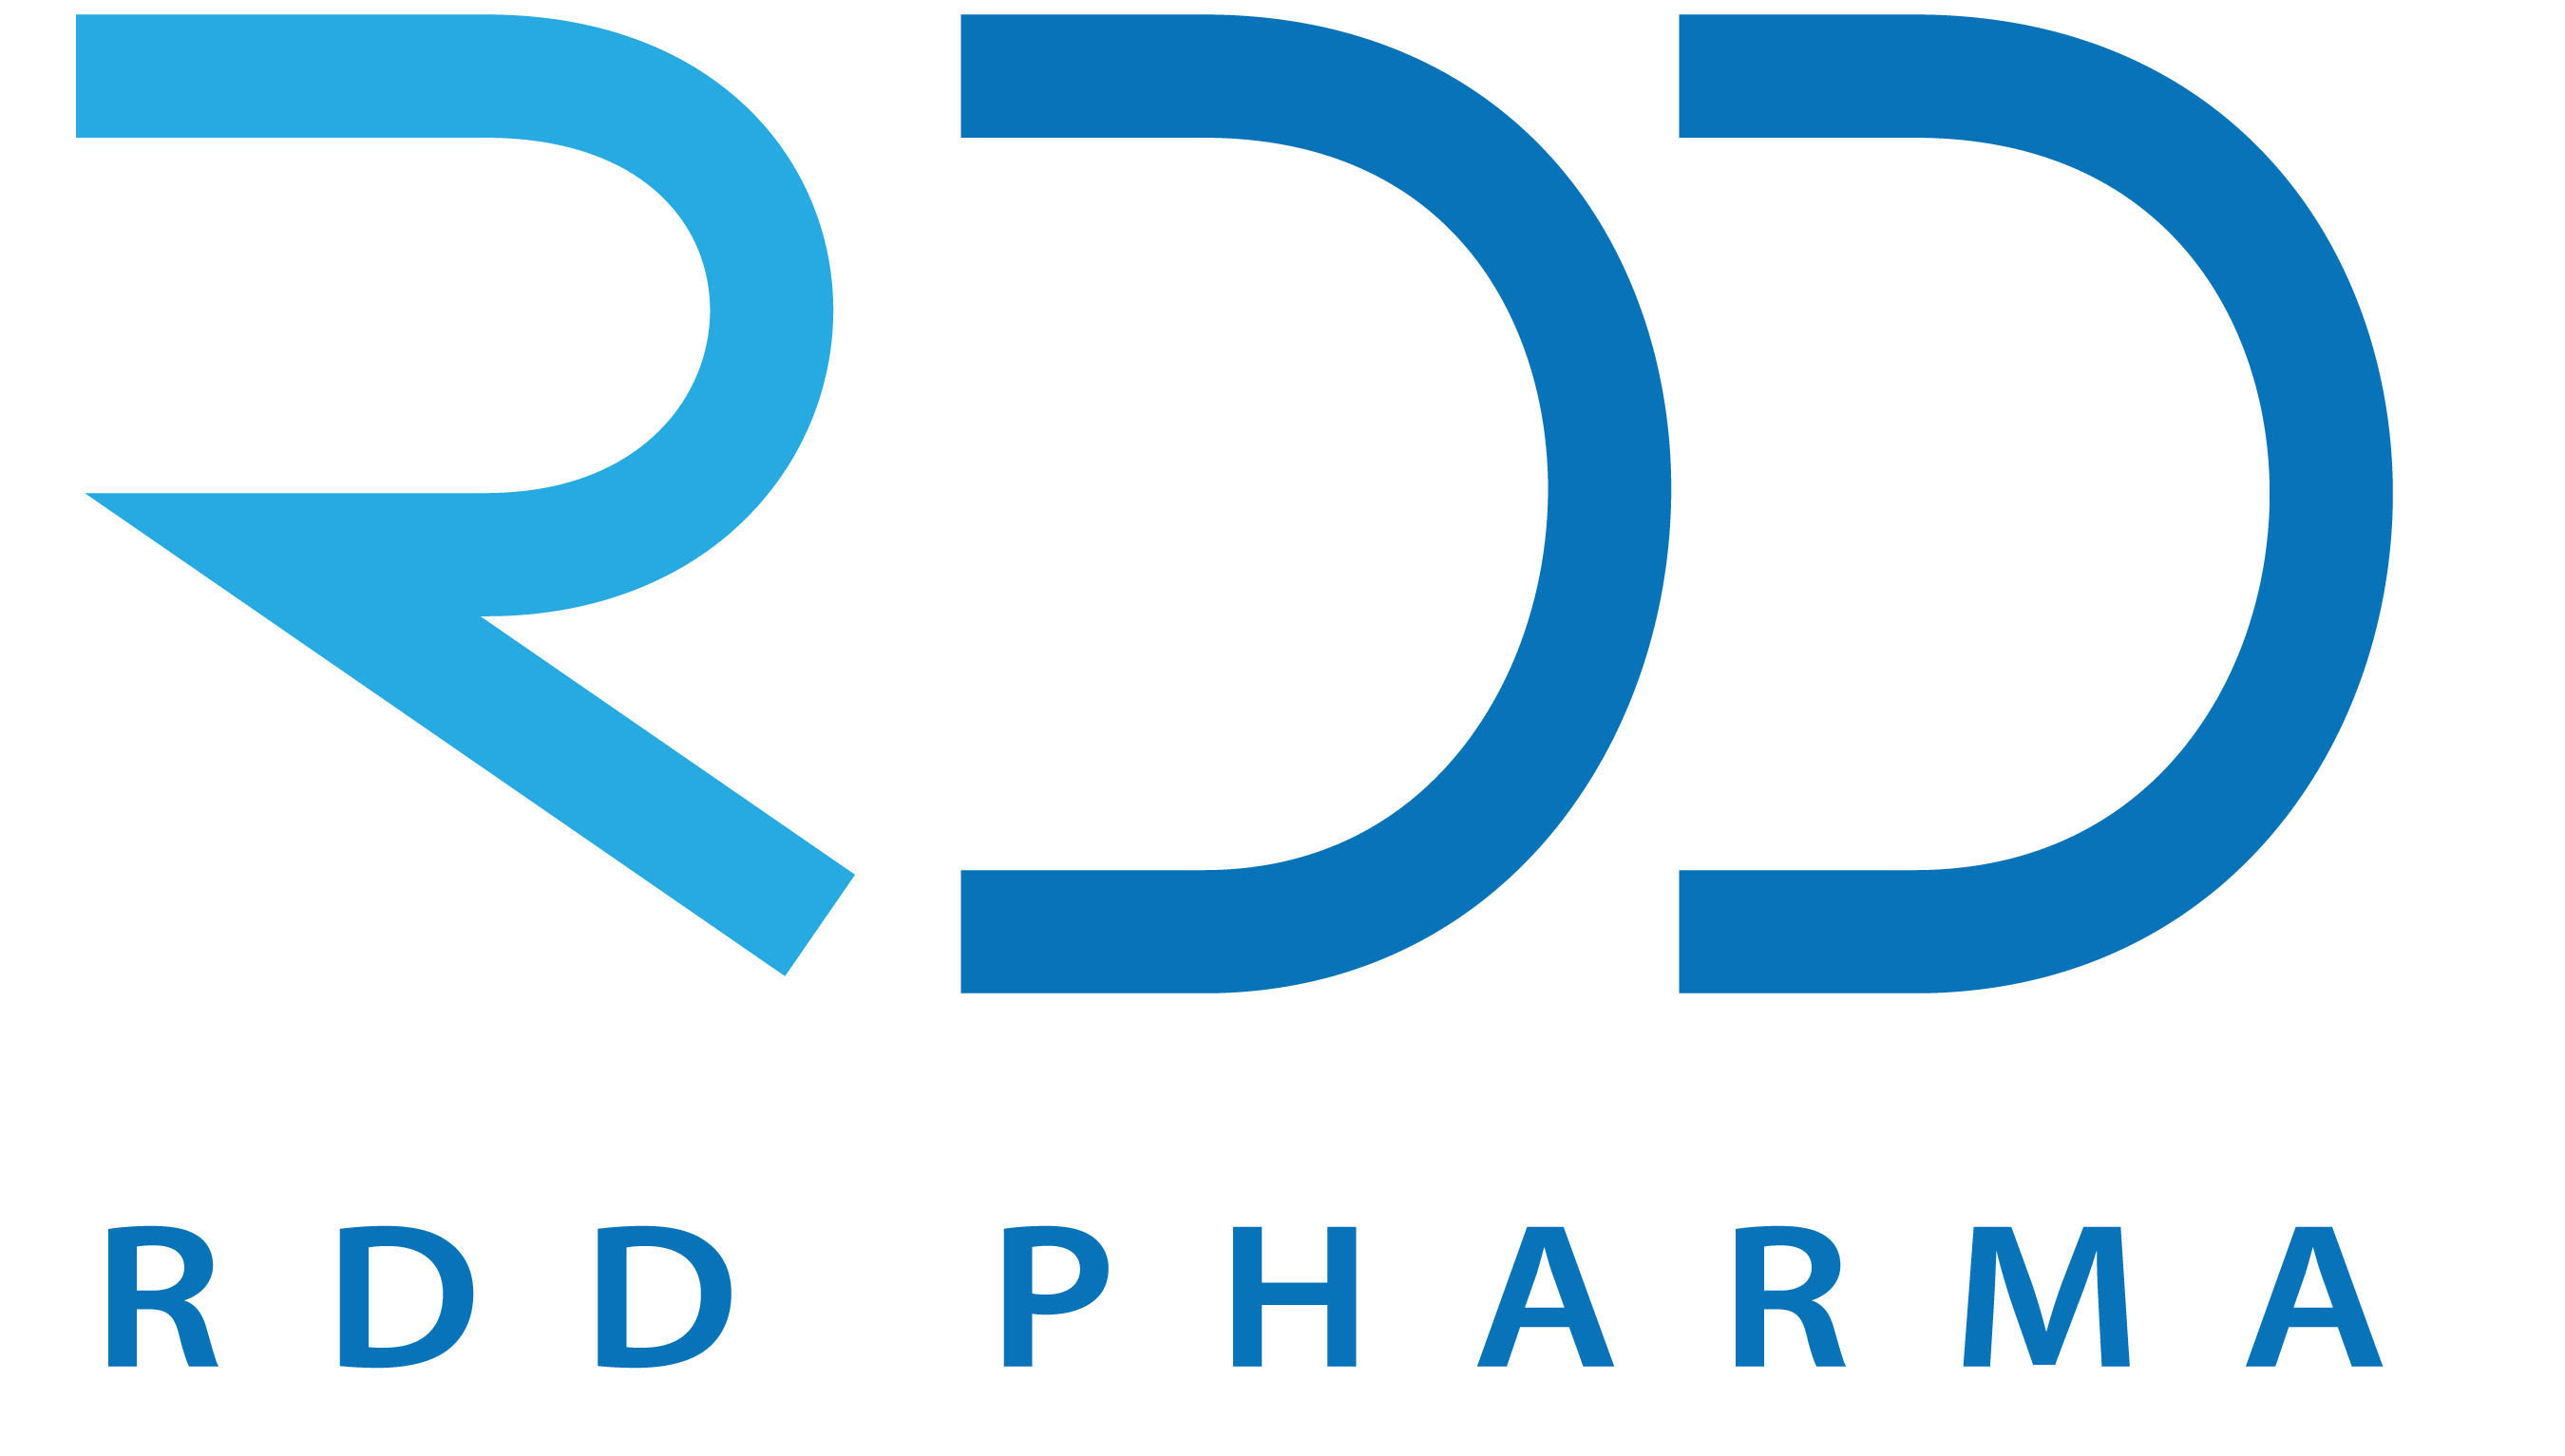 RDD Pharma logo